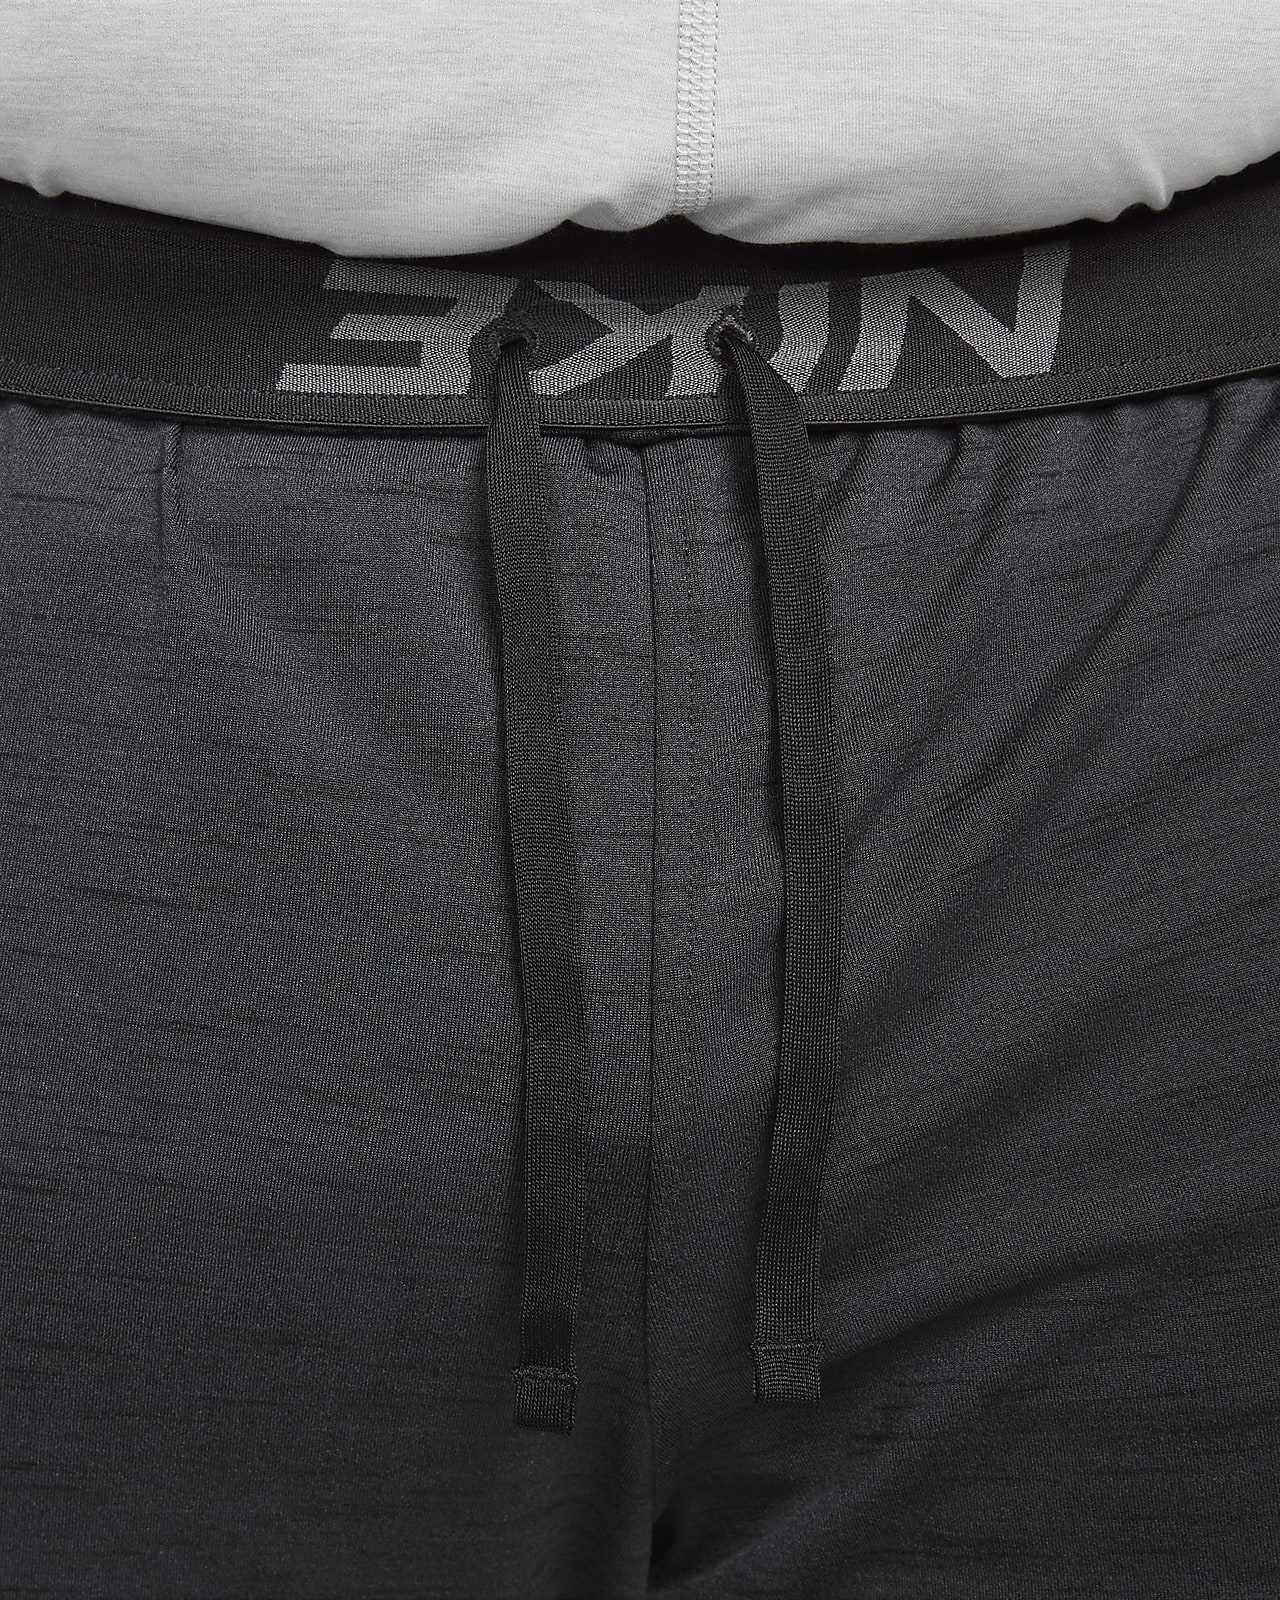 Meseta profundamente Accesible Nike Yoga Dri-FIT Men's Shorts. Nike.com